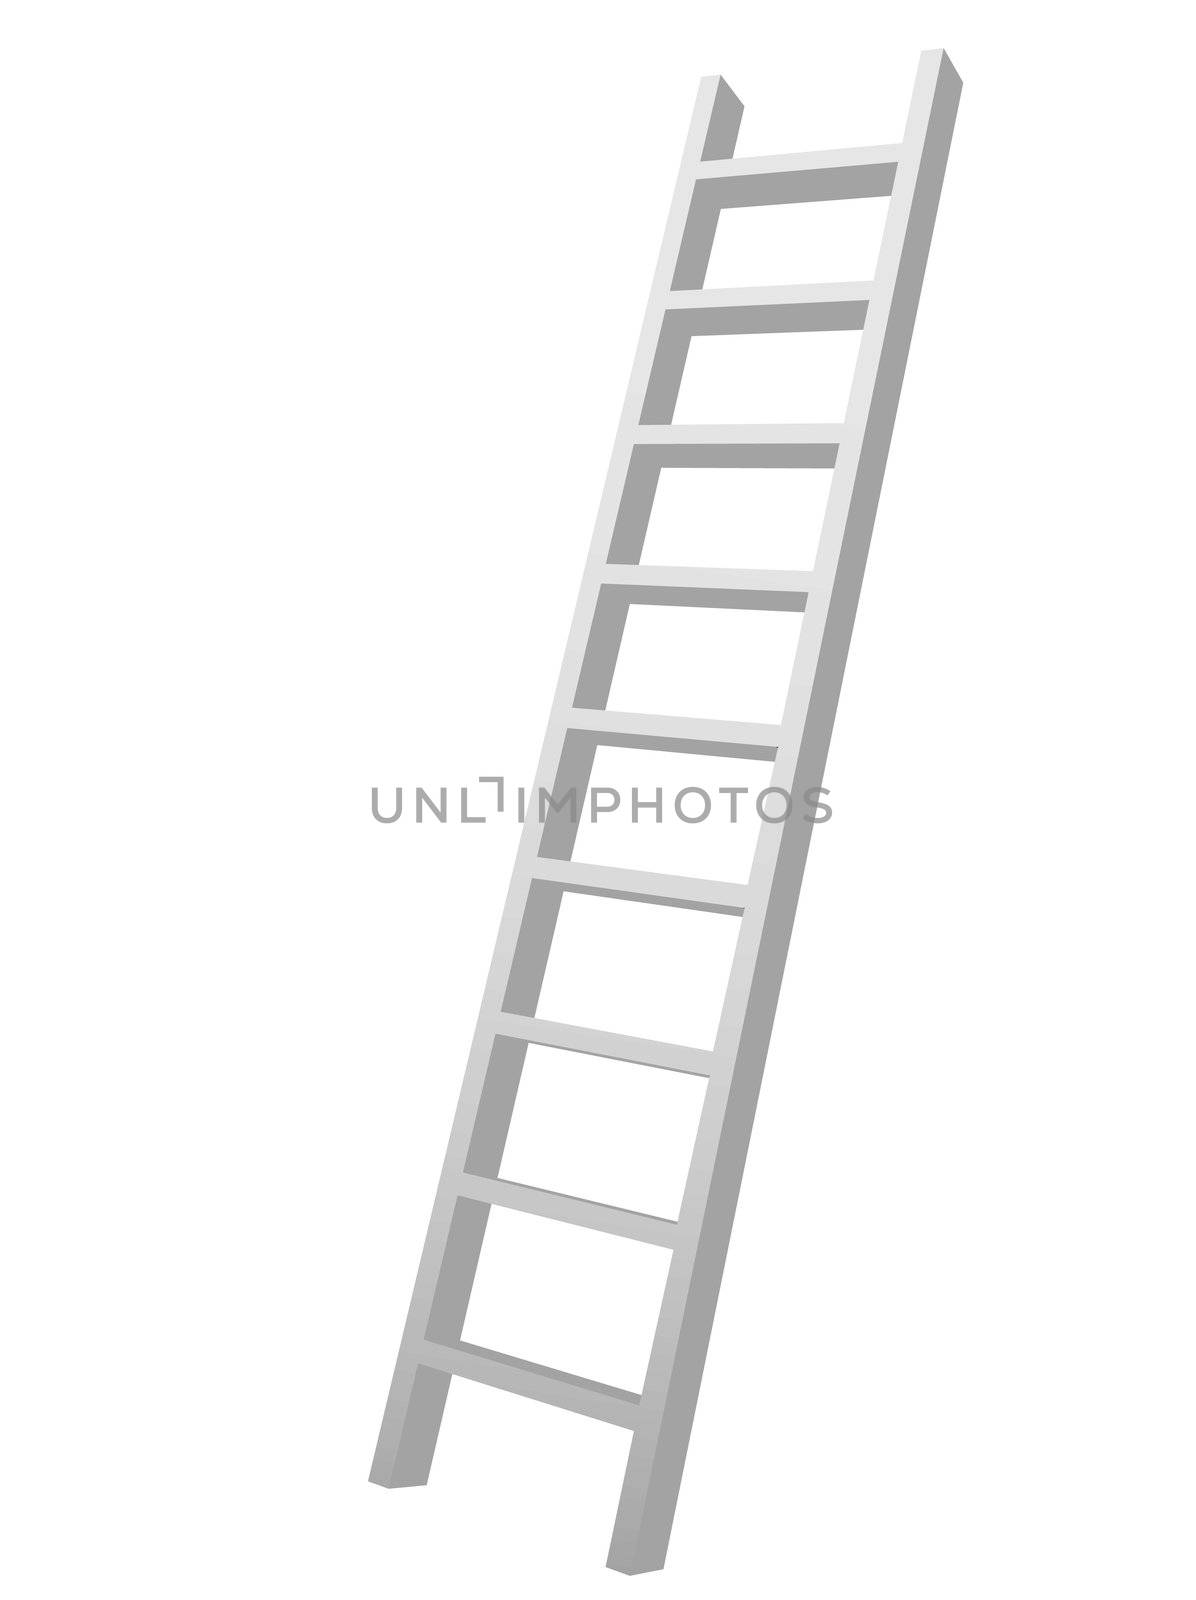 Ladder by wenbin